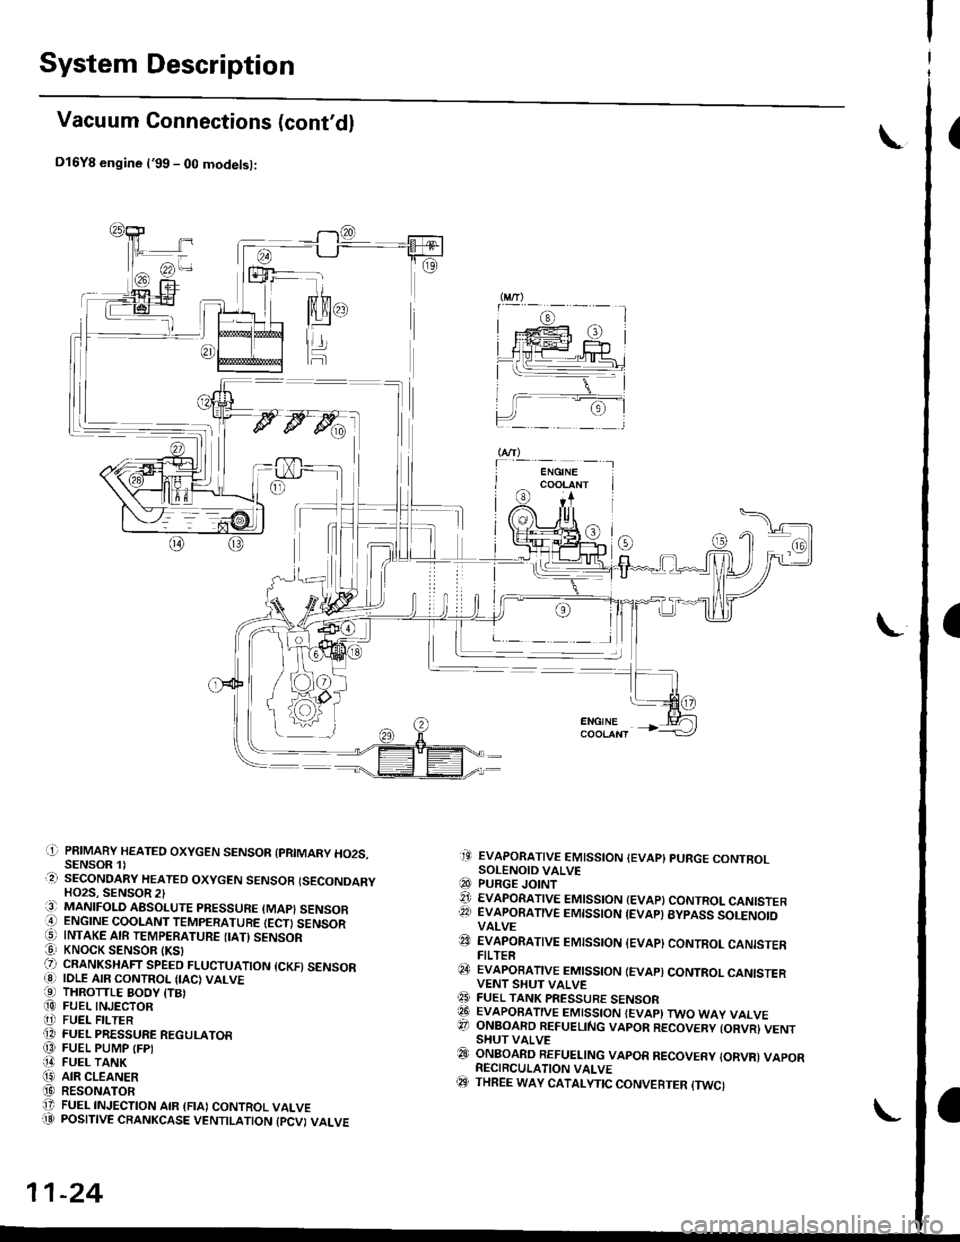 HONDA CIVIC 1999 6.G Repair Manual System Description
Vacuum Connections (contdl
D16Y8 engine l99 - 00 modetsl:
(]-i PAIMARY HEATEO OXYGEN SENSOR {PRIMARY HO2S,SENSOR 1)..2r SECONOARY HEATEO OXycEN SENSOB ISECONDARYHO2S, SENSOR 2li3)